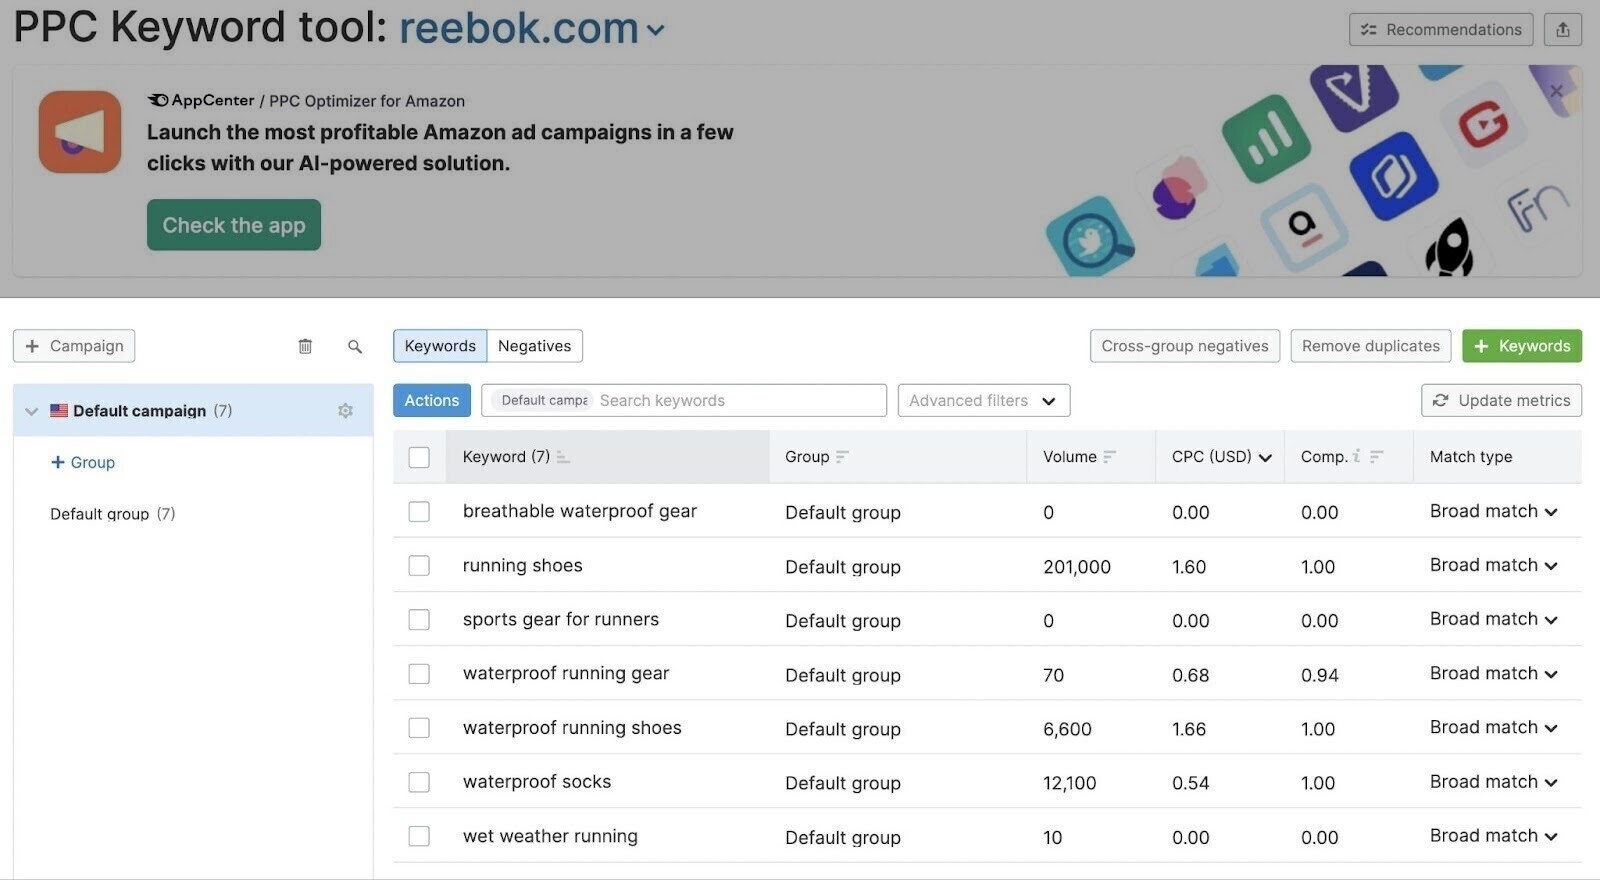 PPC Keyword Tool dashboard for "reebook.com"